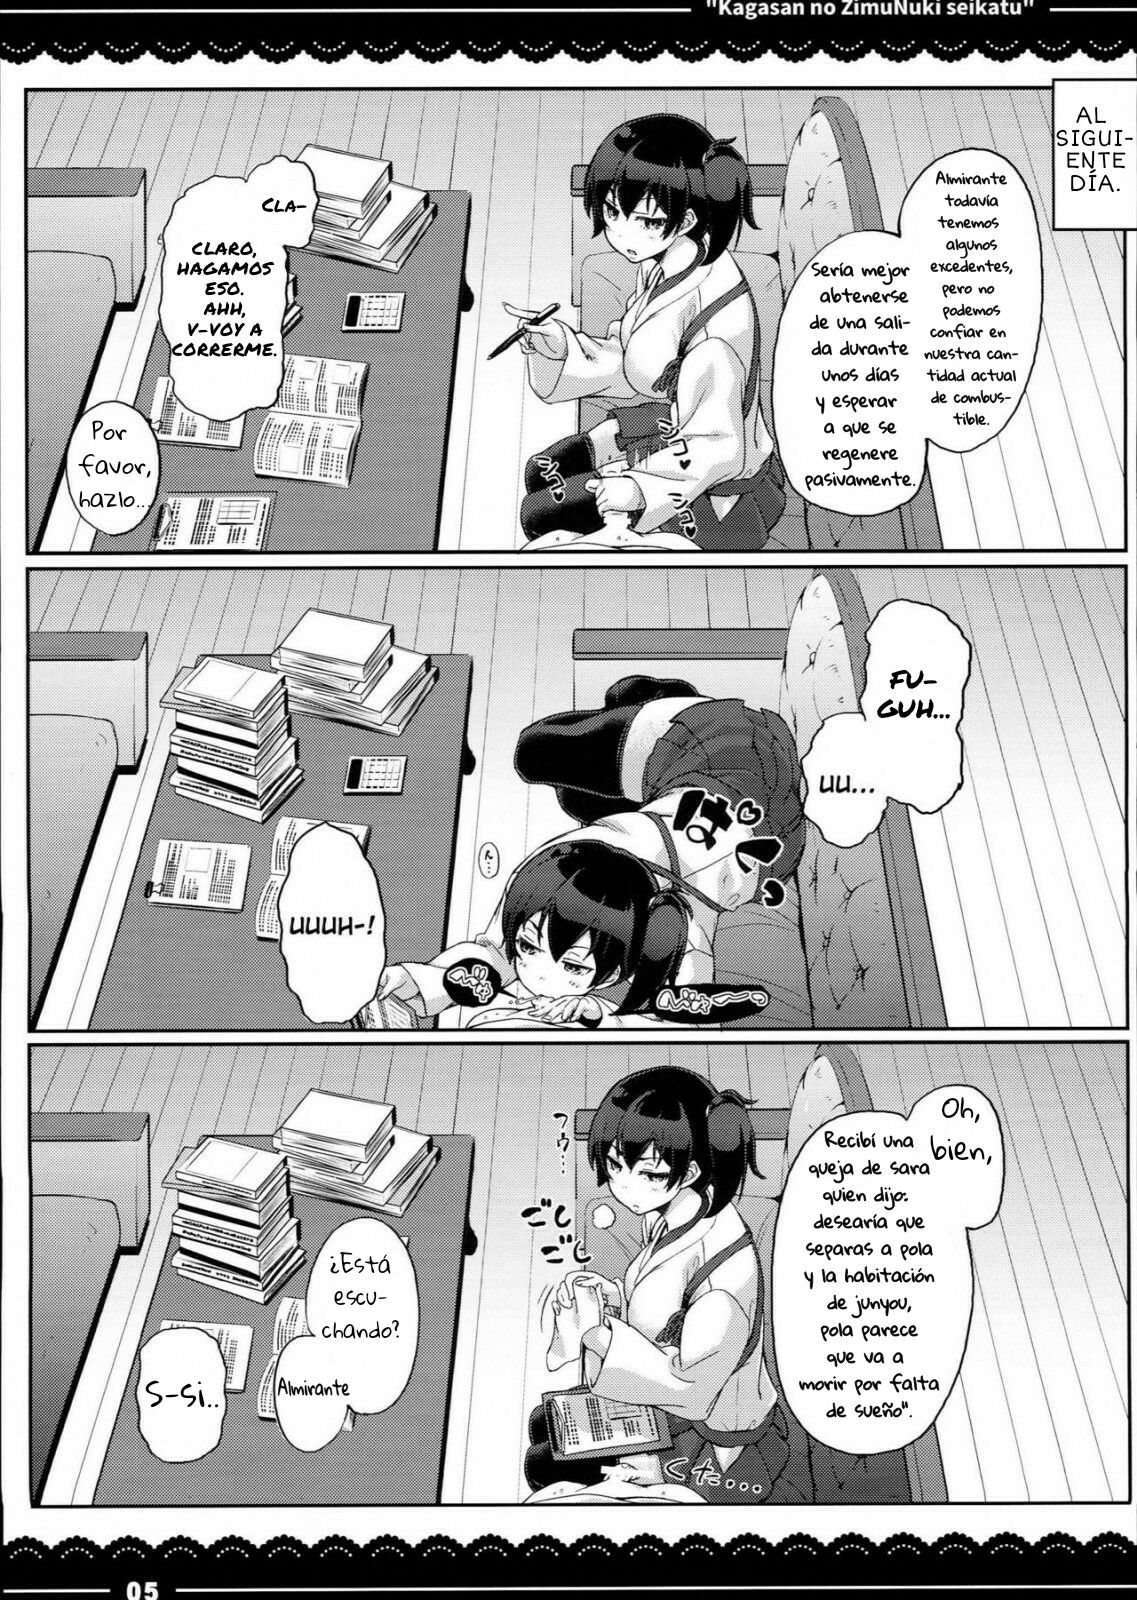 kaga-san's work skipping sex life-chapter 1 - 5